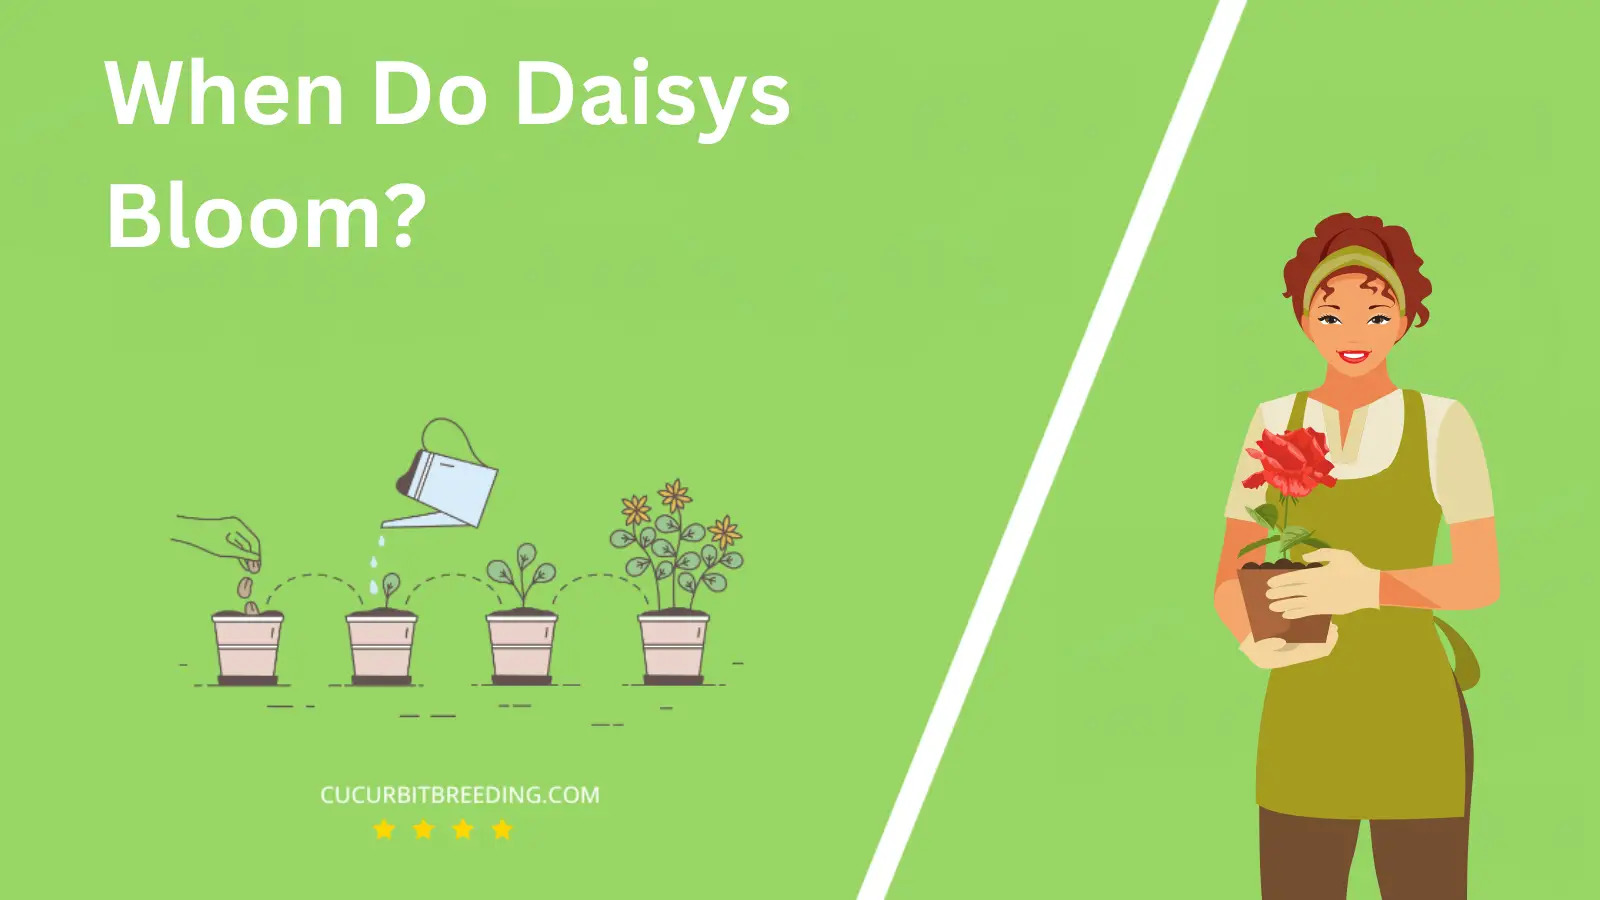 When Do Daisys Bloom?